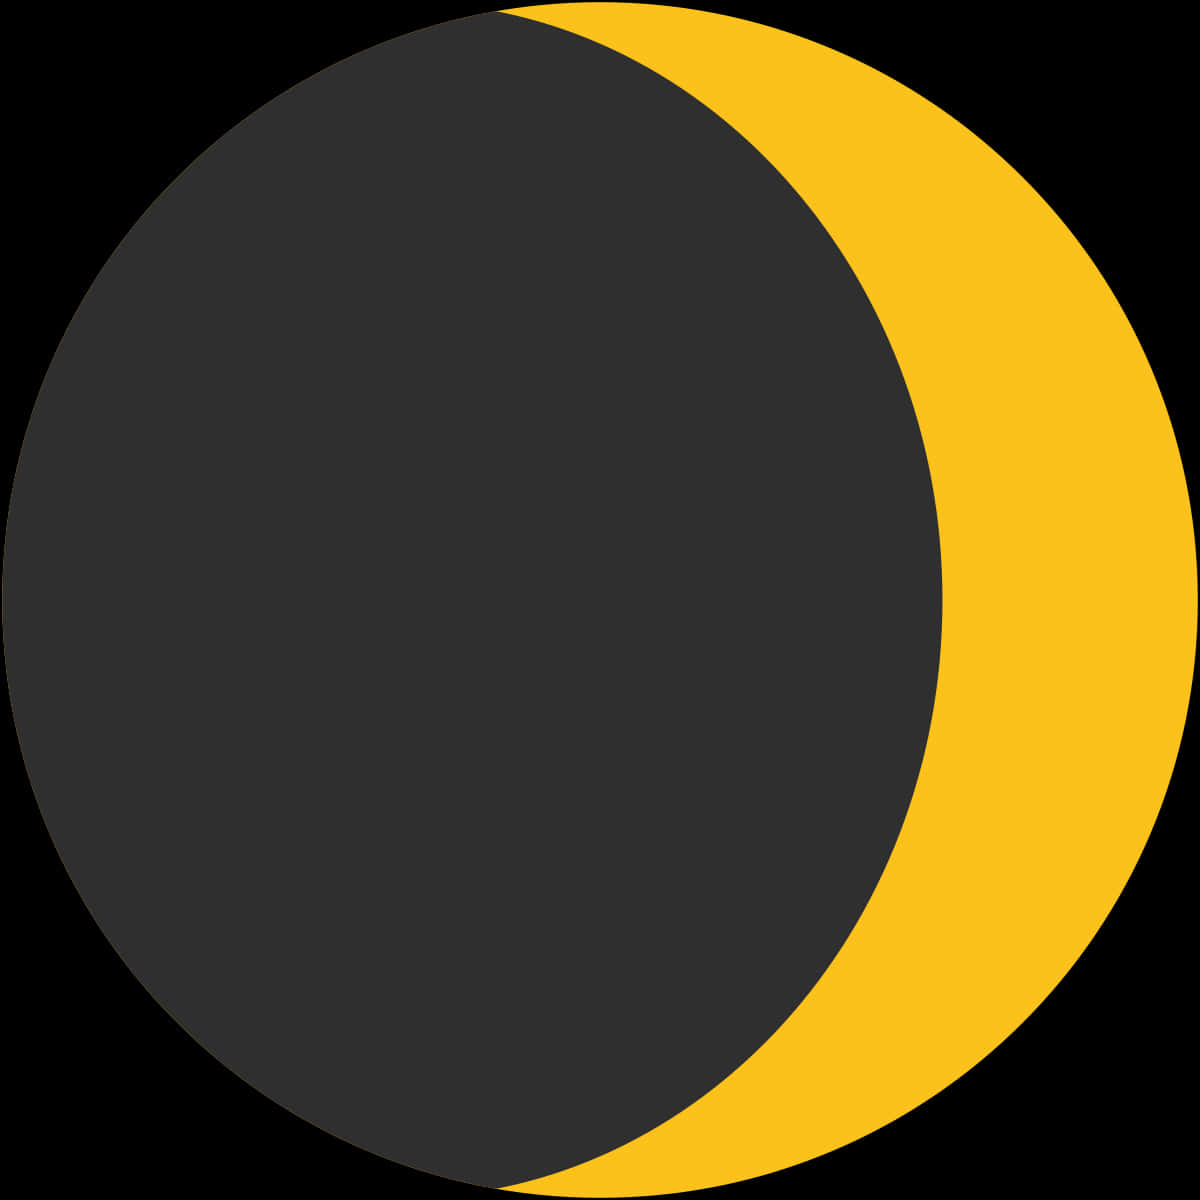 Abstract Crescent Moon Illustration